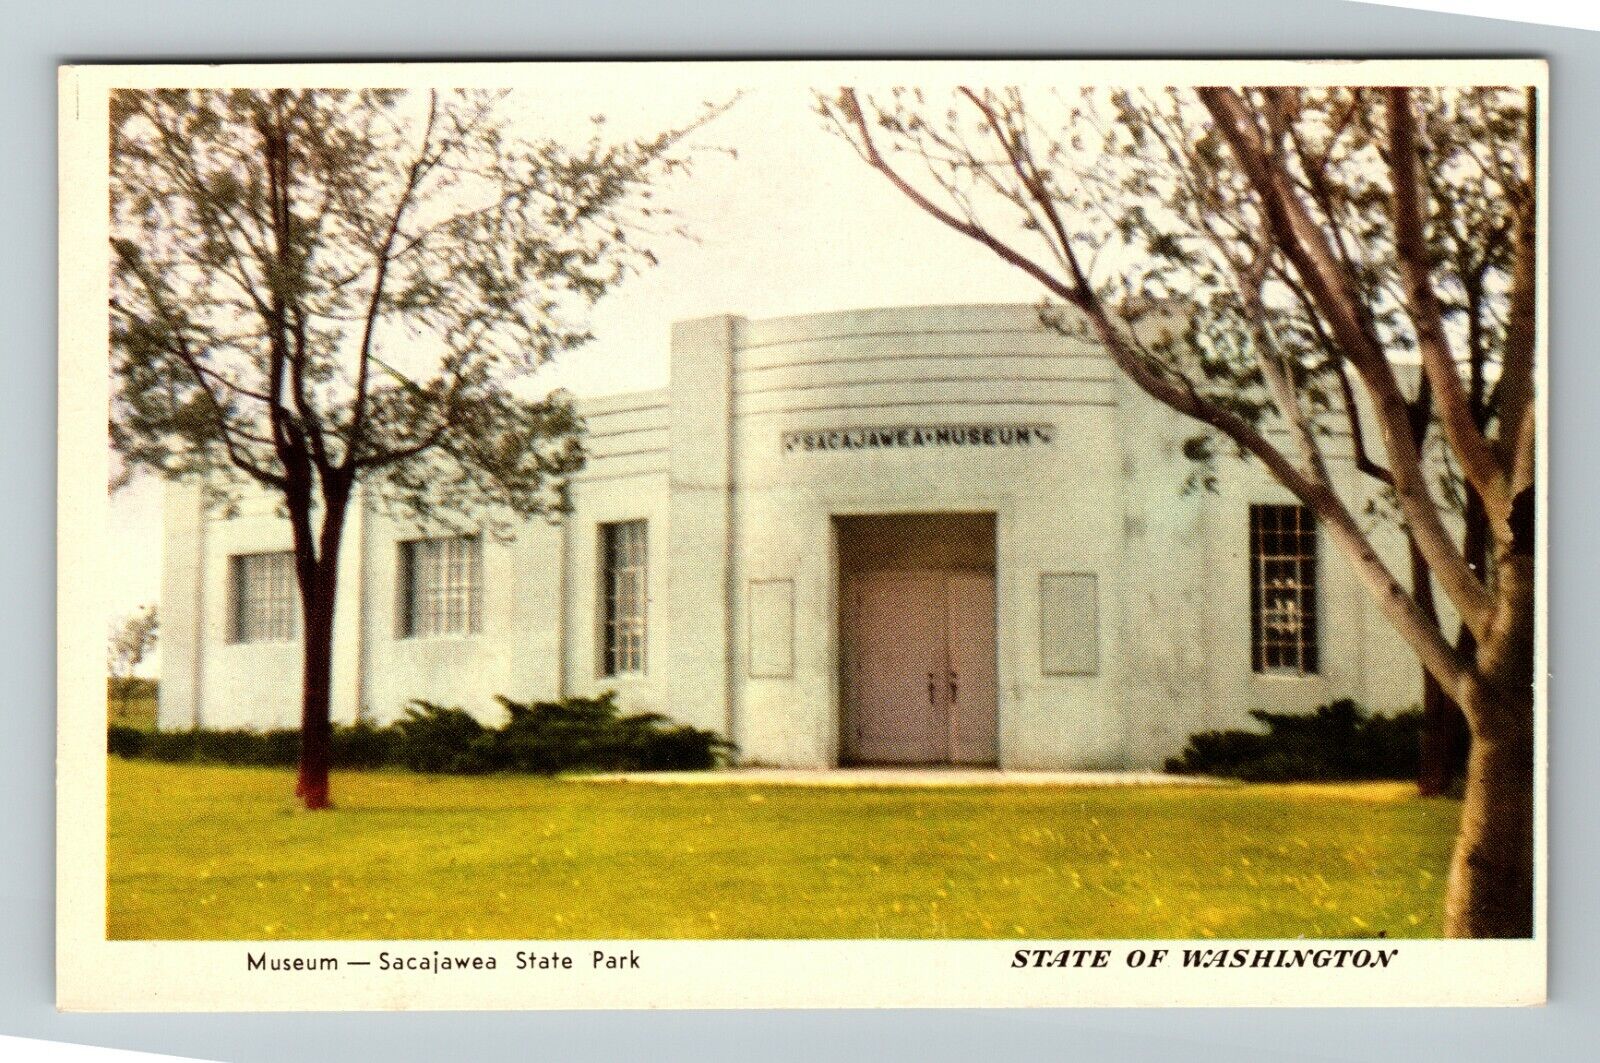 WA-Washington, Museum Sacajawea State Park, Outside, Vintage Postcard